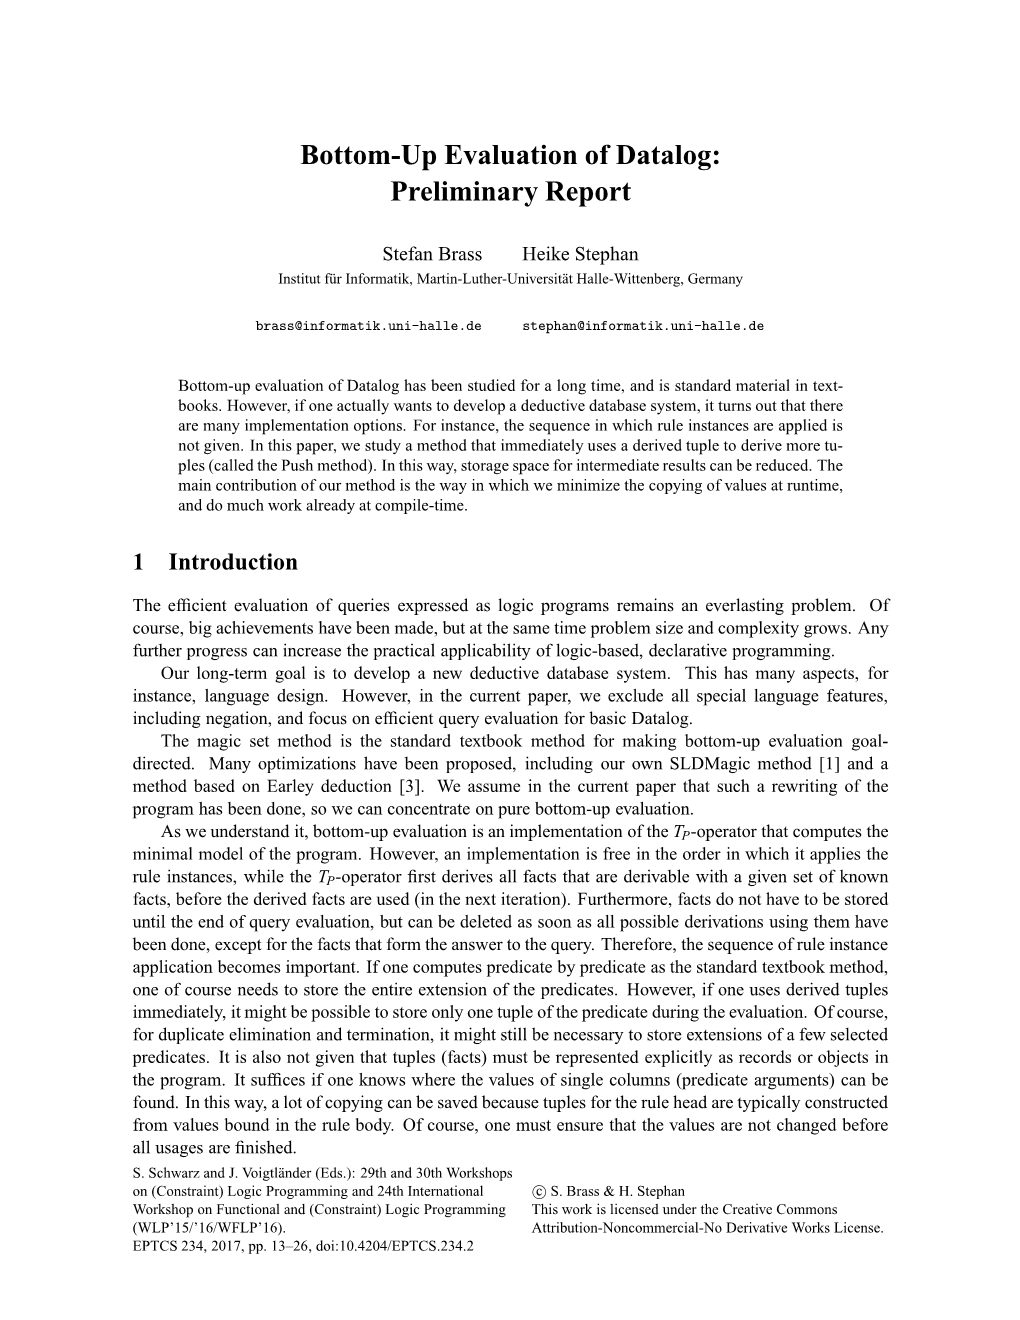 Bottom-Up Evaluation of Datalog: Preliminary Report